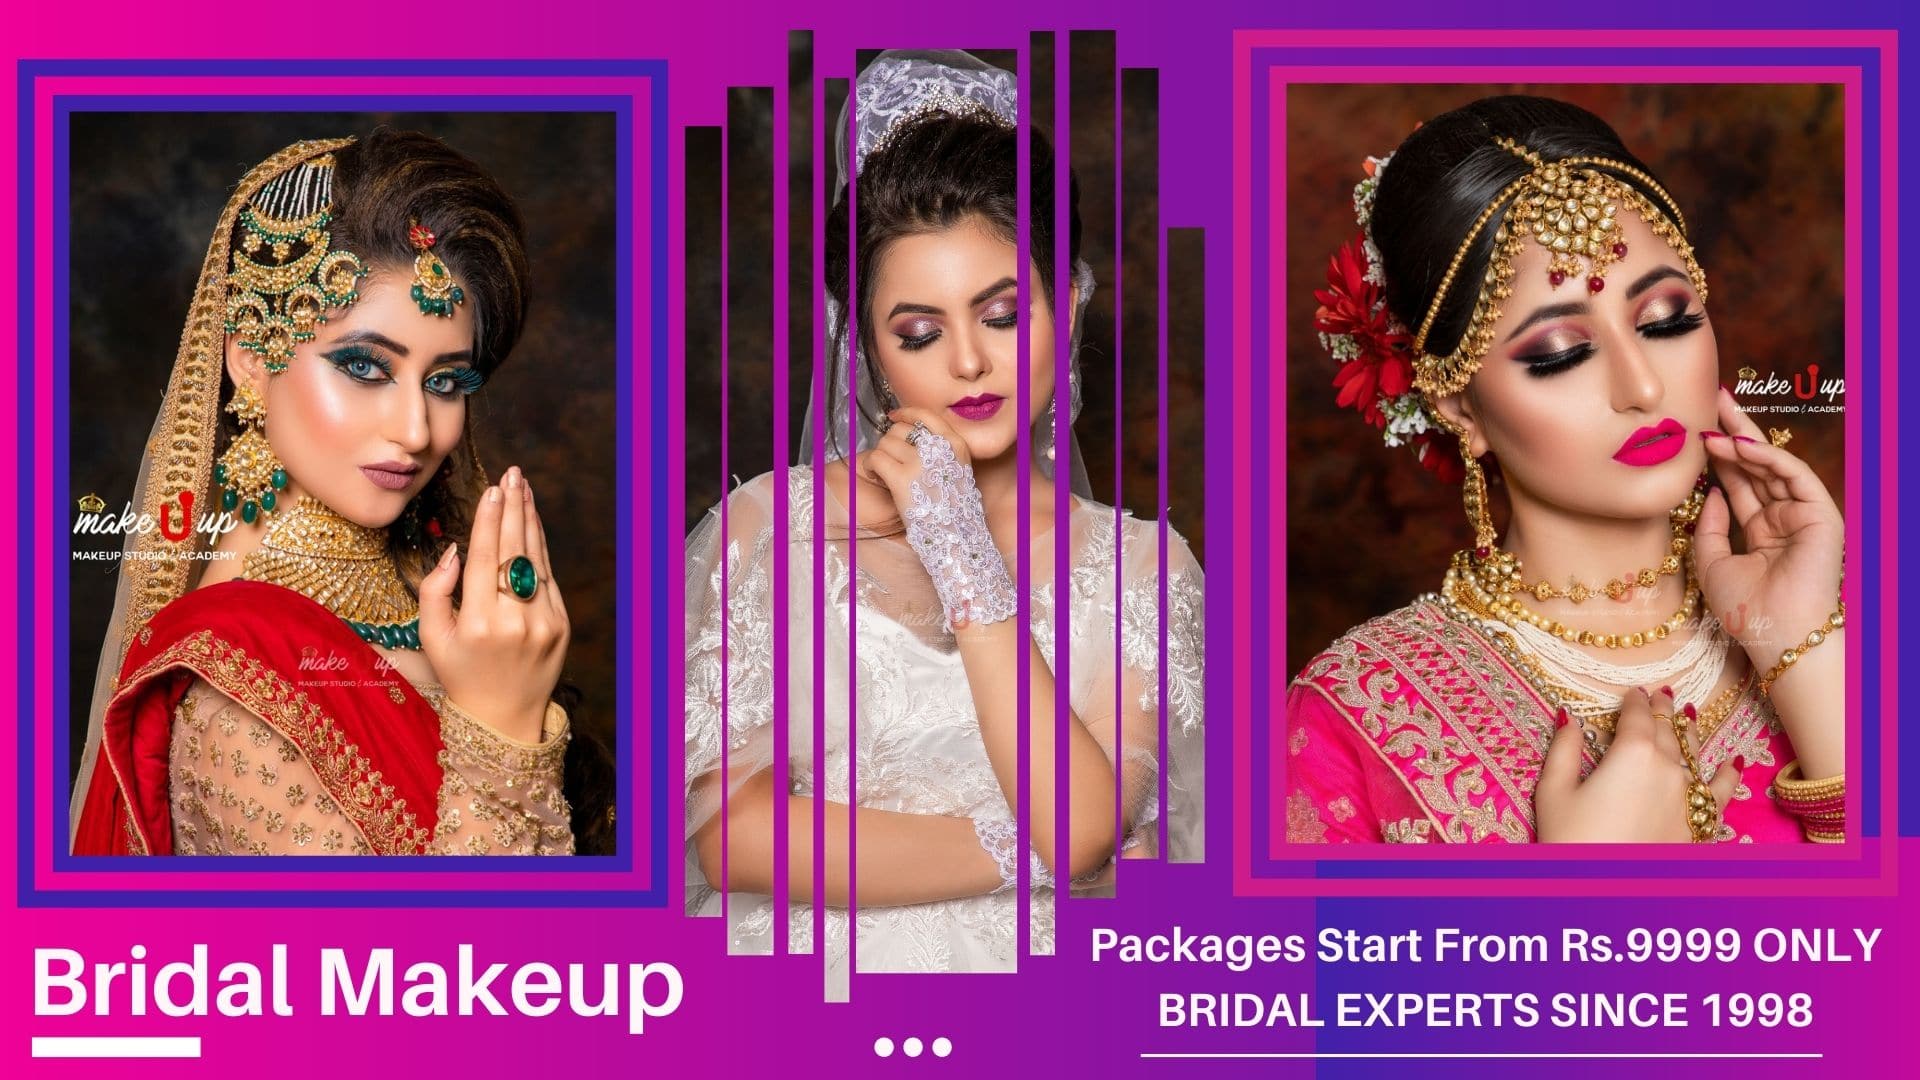 Best Bridal Makeup Artist In Delhi Since 1998 Bridal Price ₹7999 Only